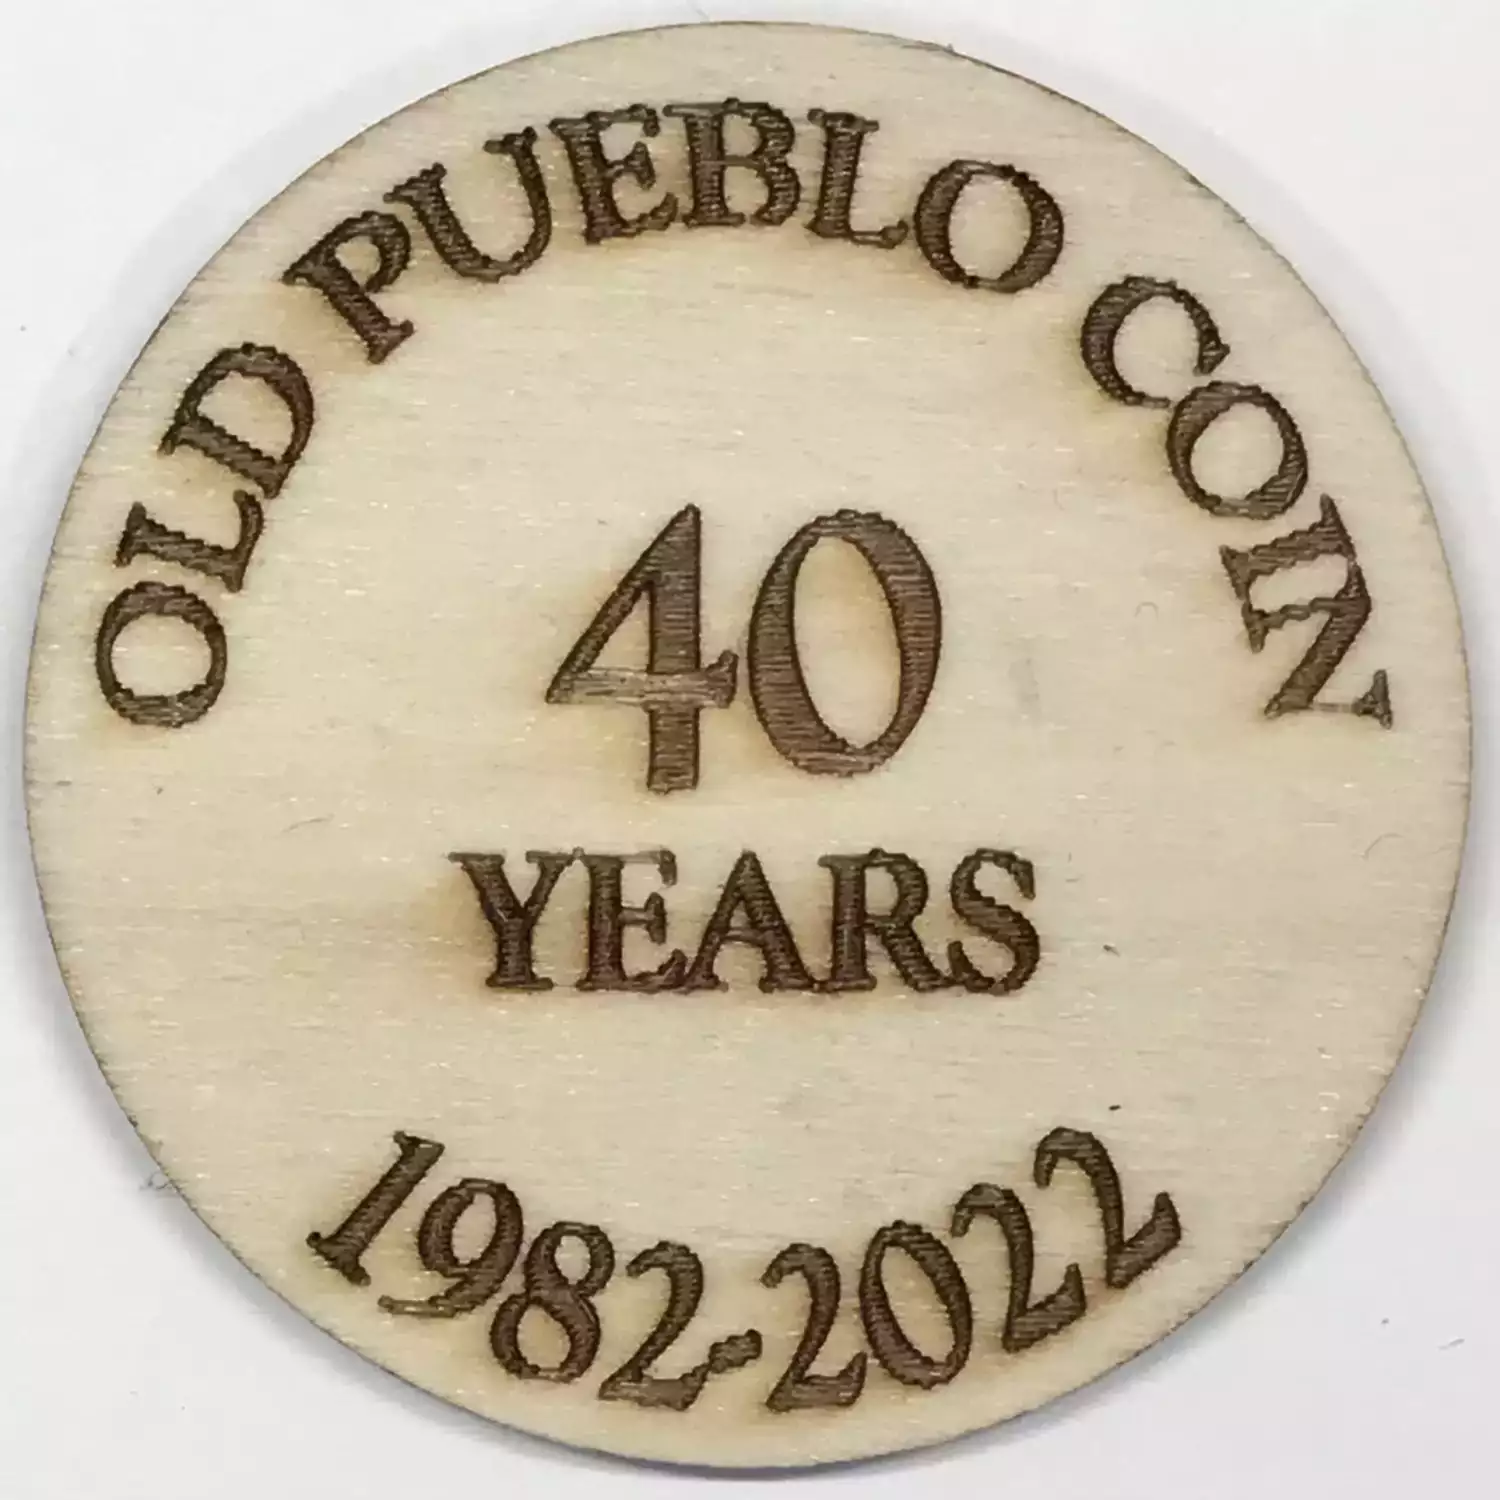 1982-2022 Old Pueblo Coin 40th Anniversary 